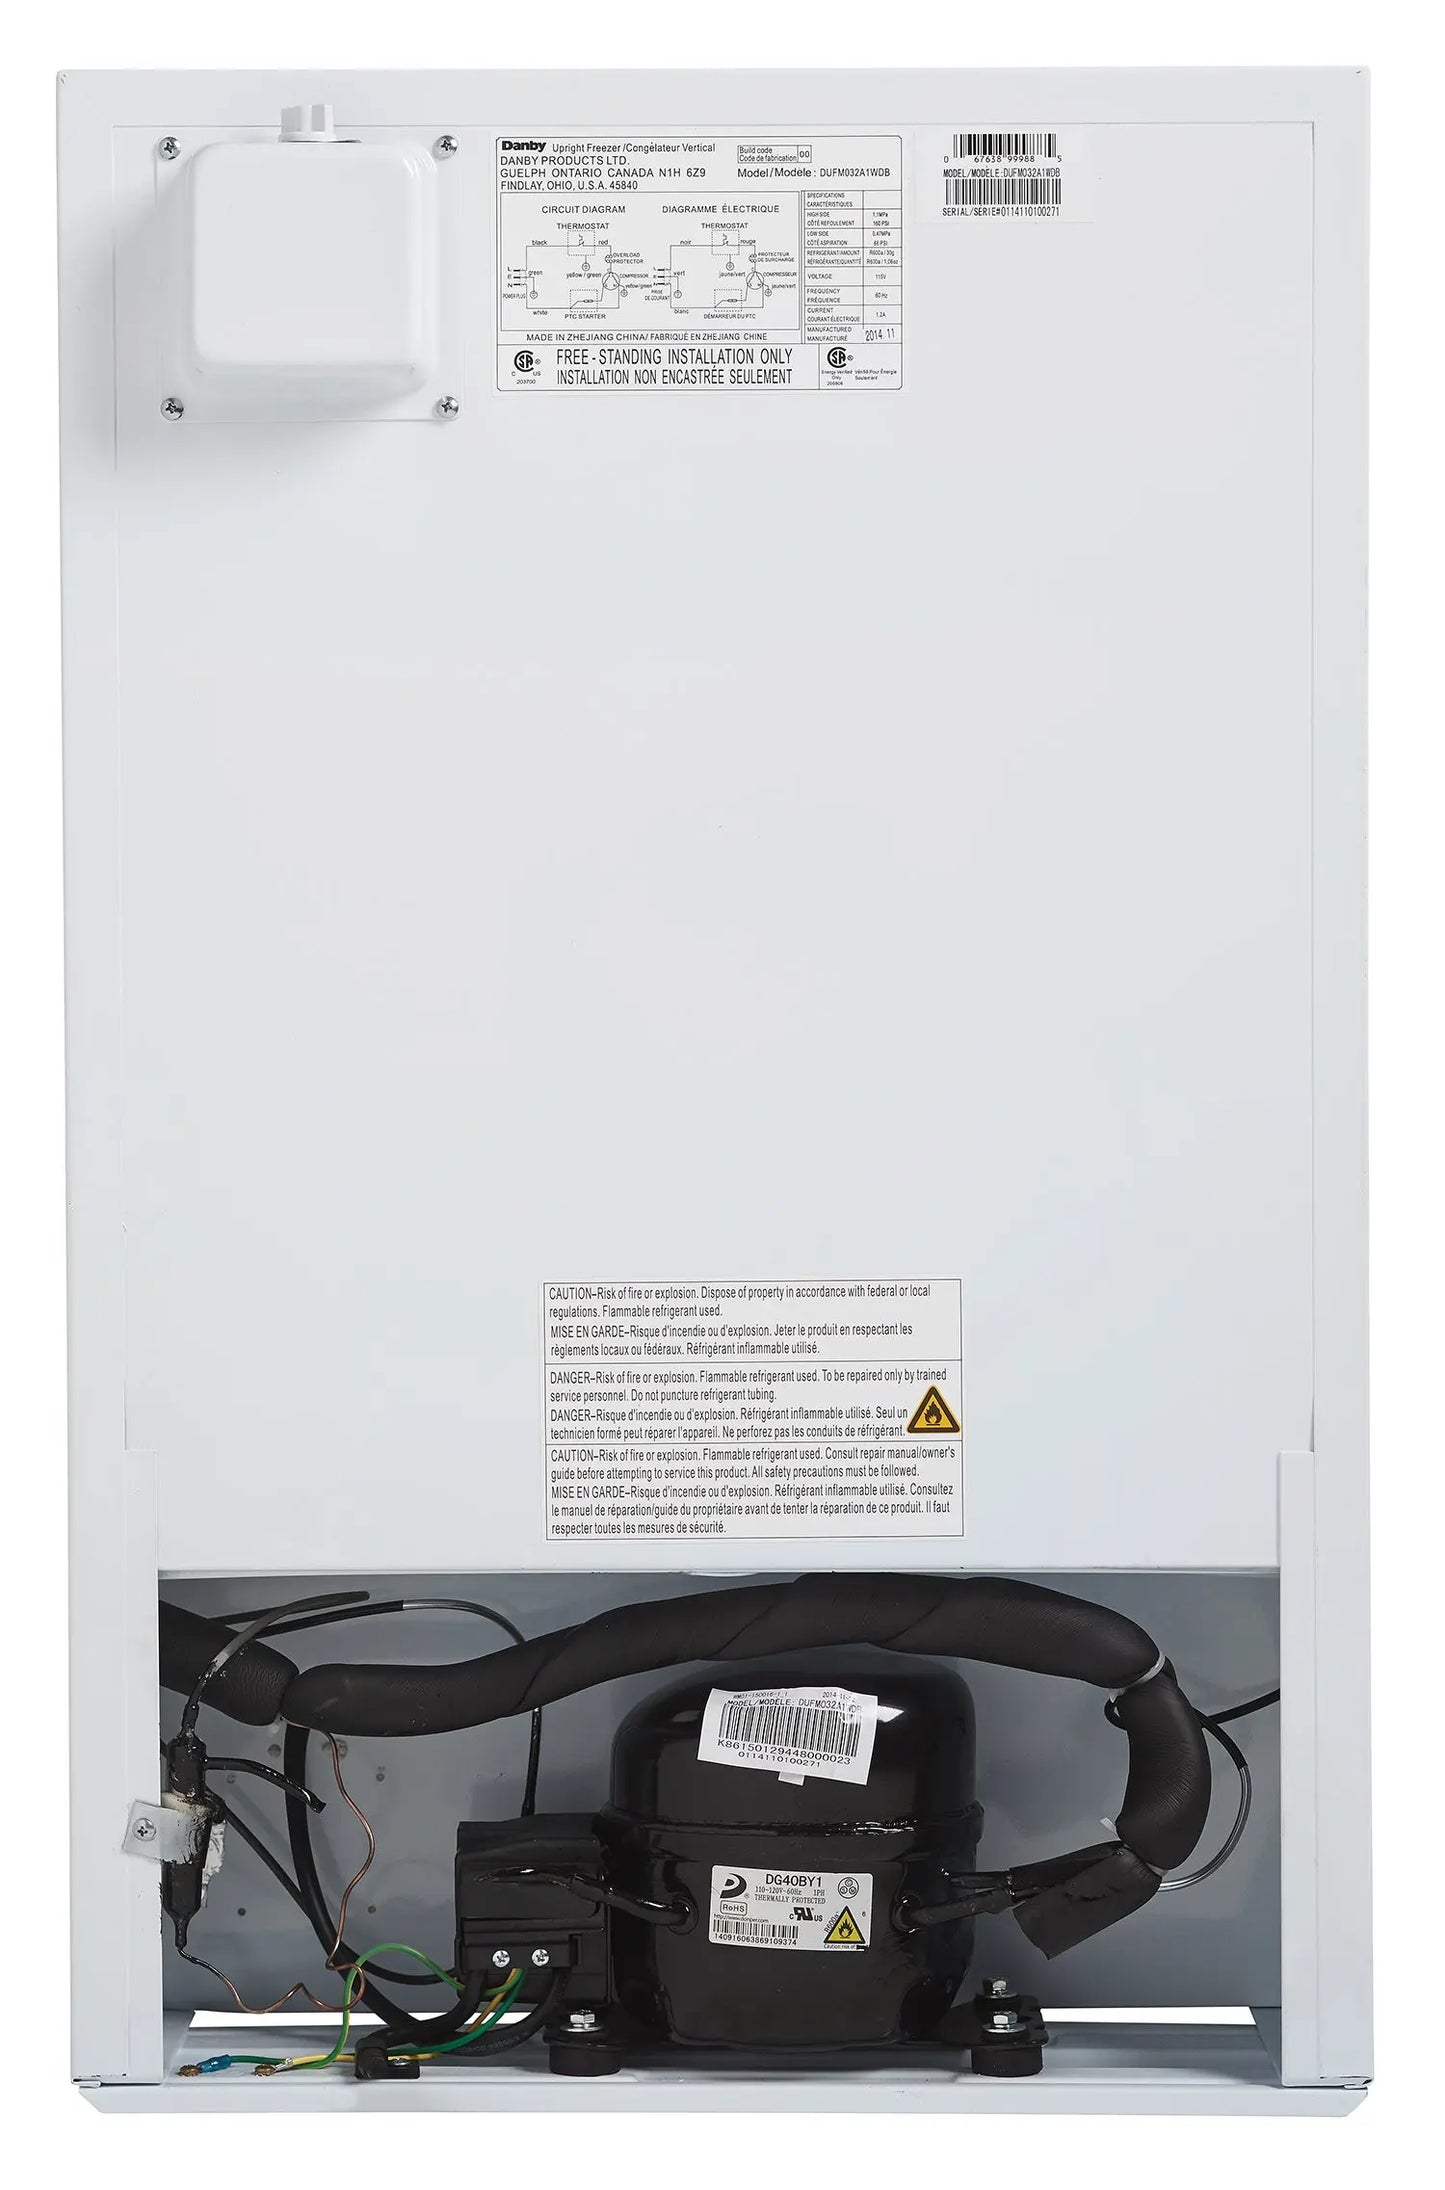 3.2 Cu. Ft. Upright Freezer - Mechanical Thermostat, Manual Defrost | Danby | Fridge.com